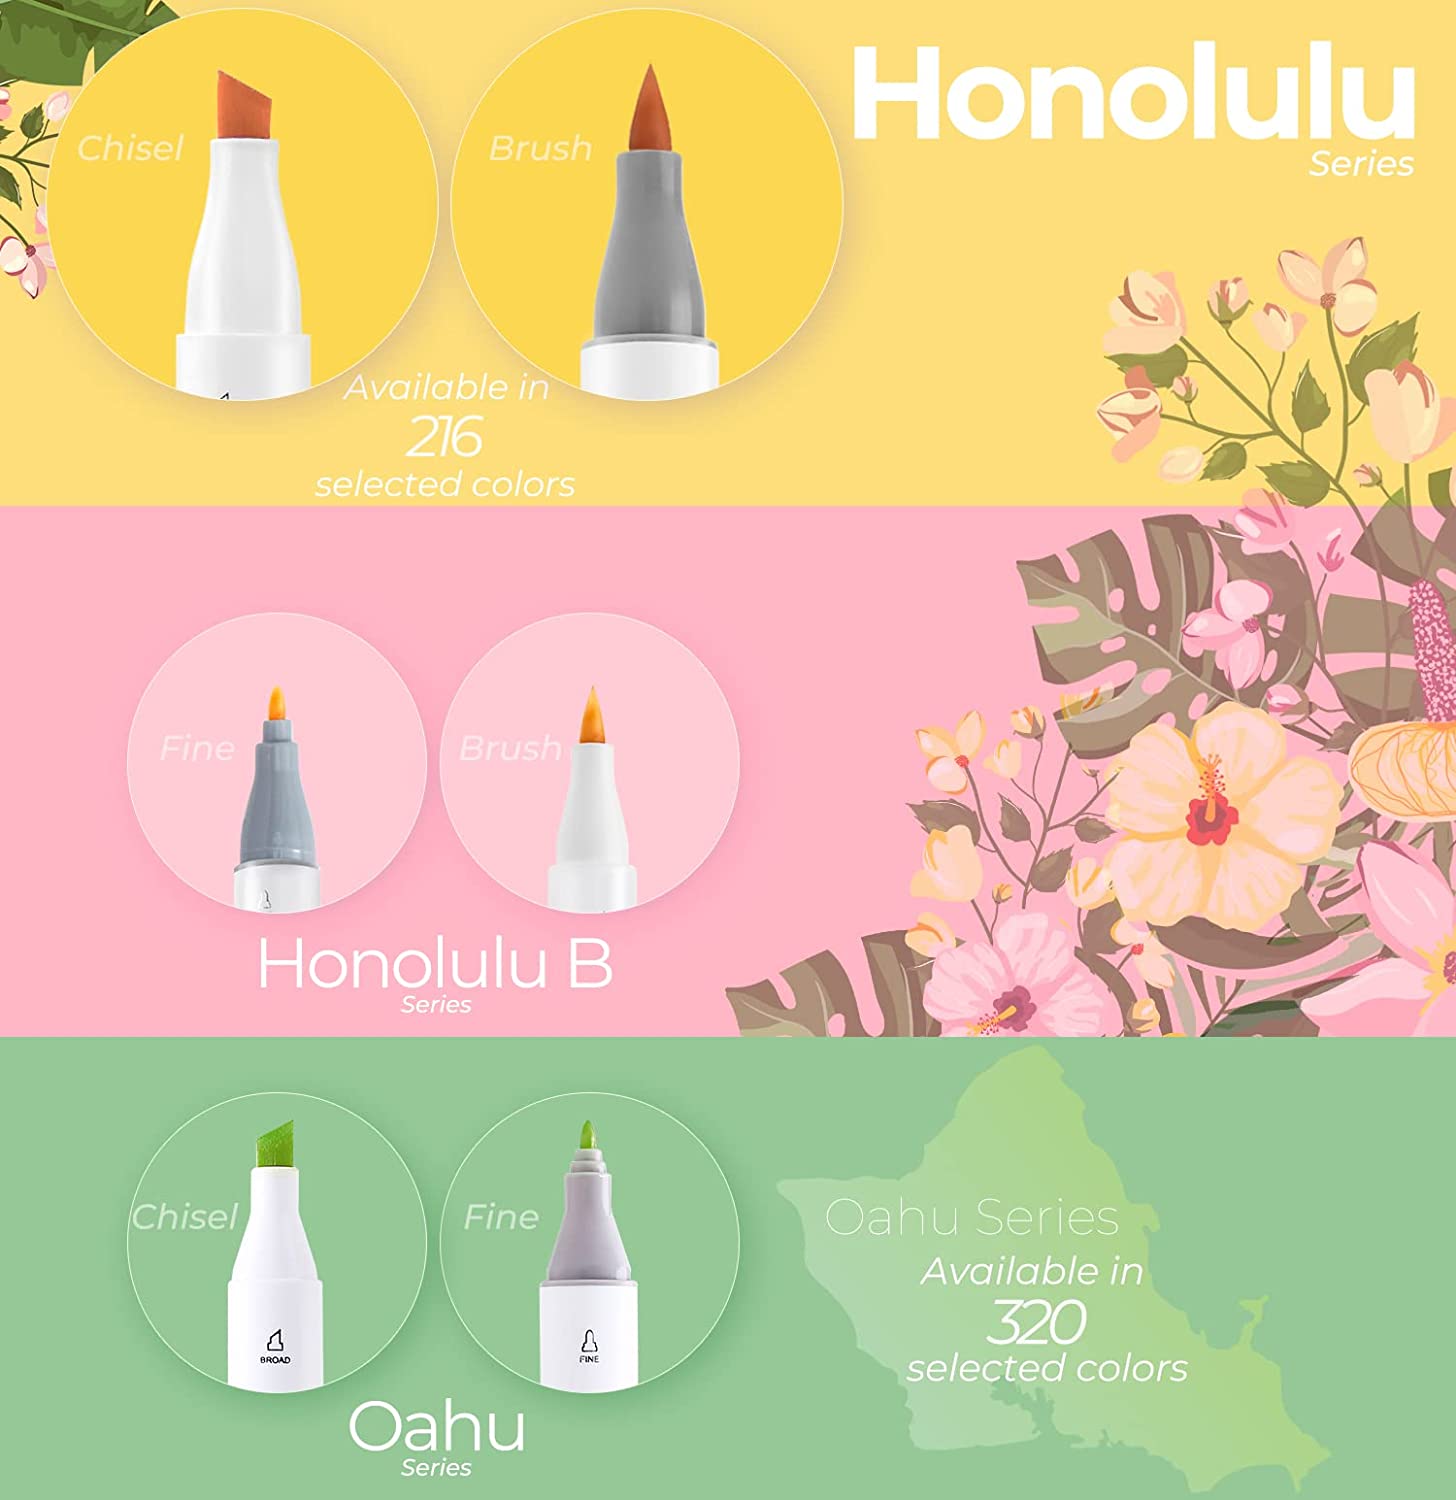 Ohuhu Honolulu 36 Skin Tone Colors Dual Tips Alcohol Art Markers